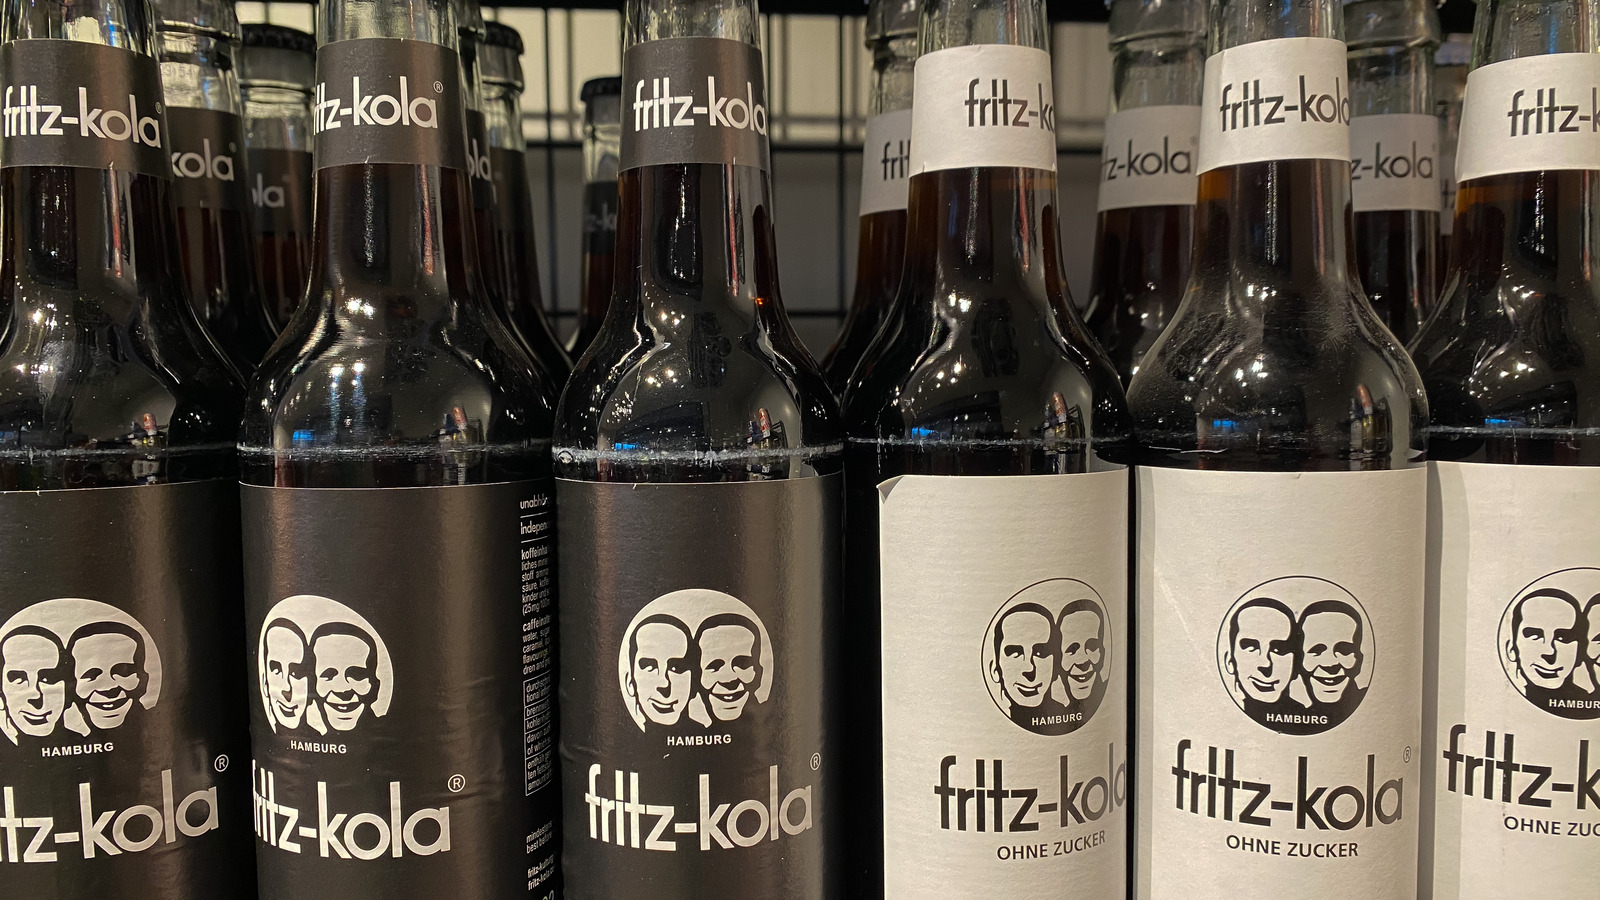 What Makes Germany’s Super Caffeinated Fritz-Kola Soda Unique? – Tasting Table